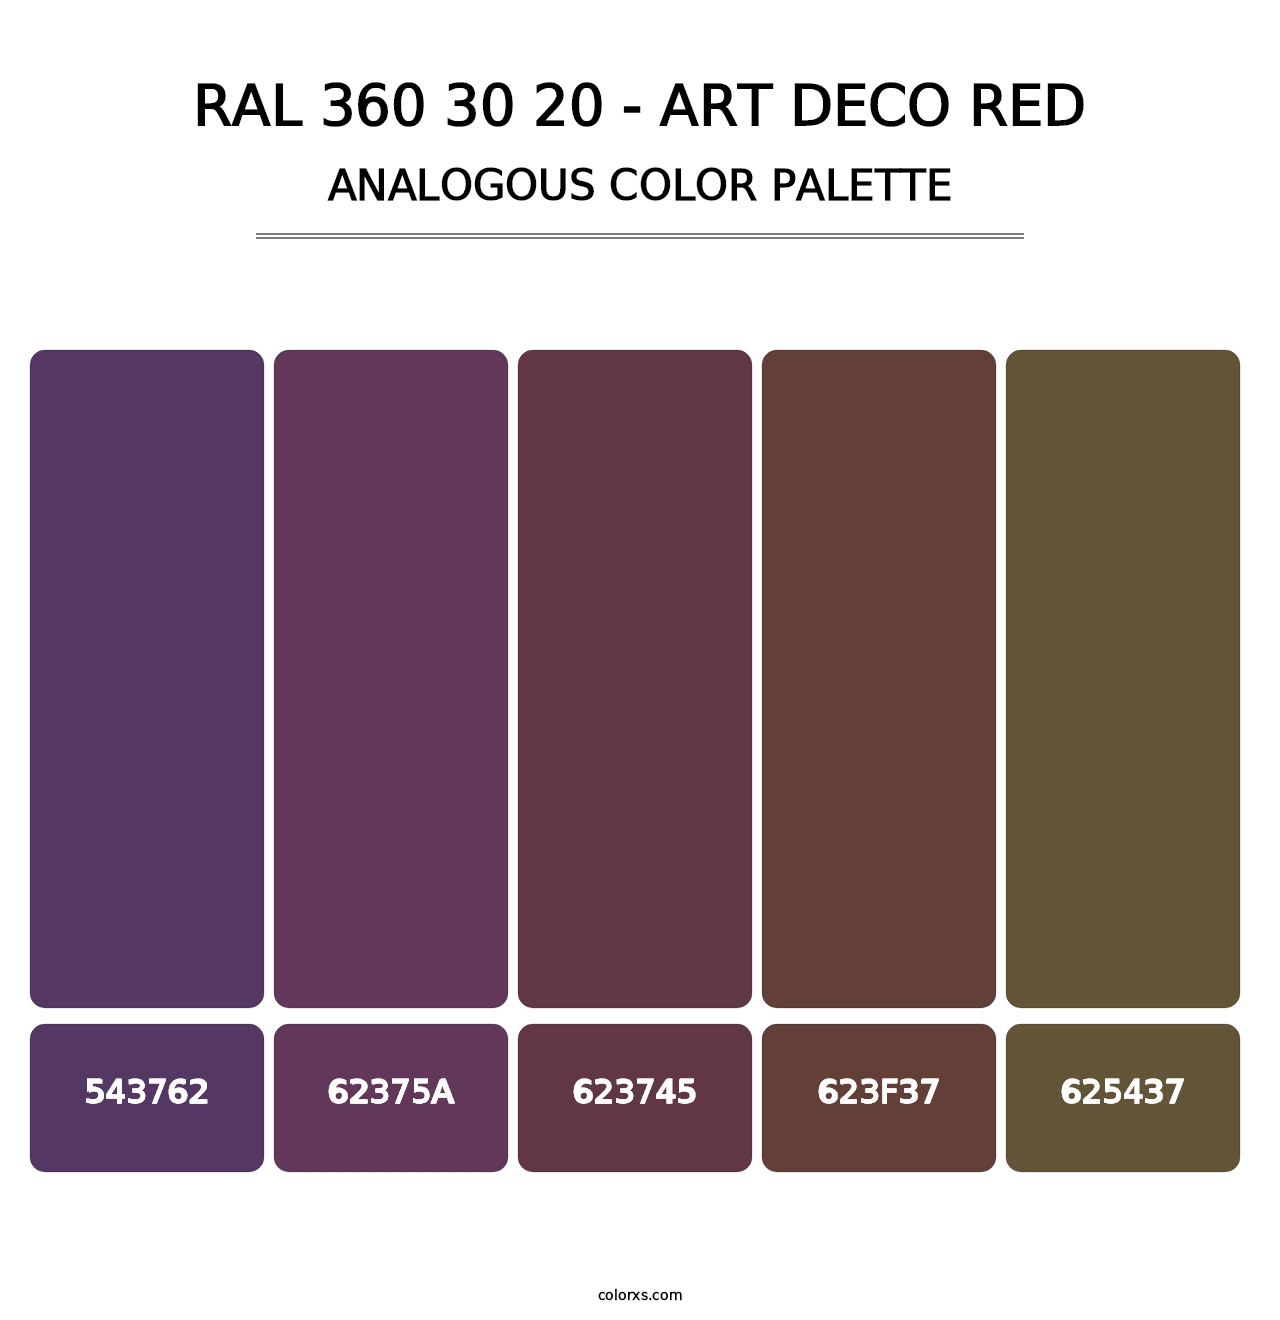 RAL 360 30 20 - Art Deco Red - Analogous Color Palette